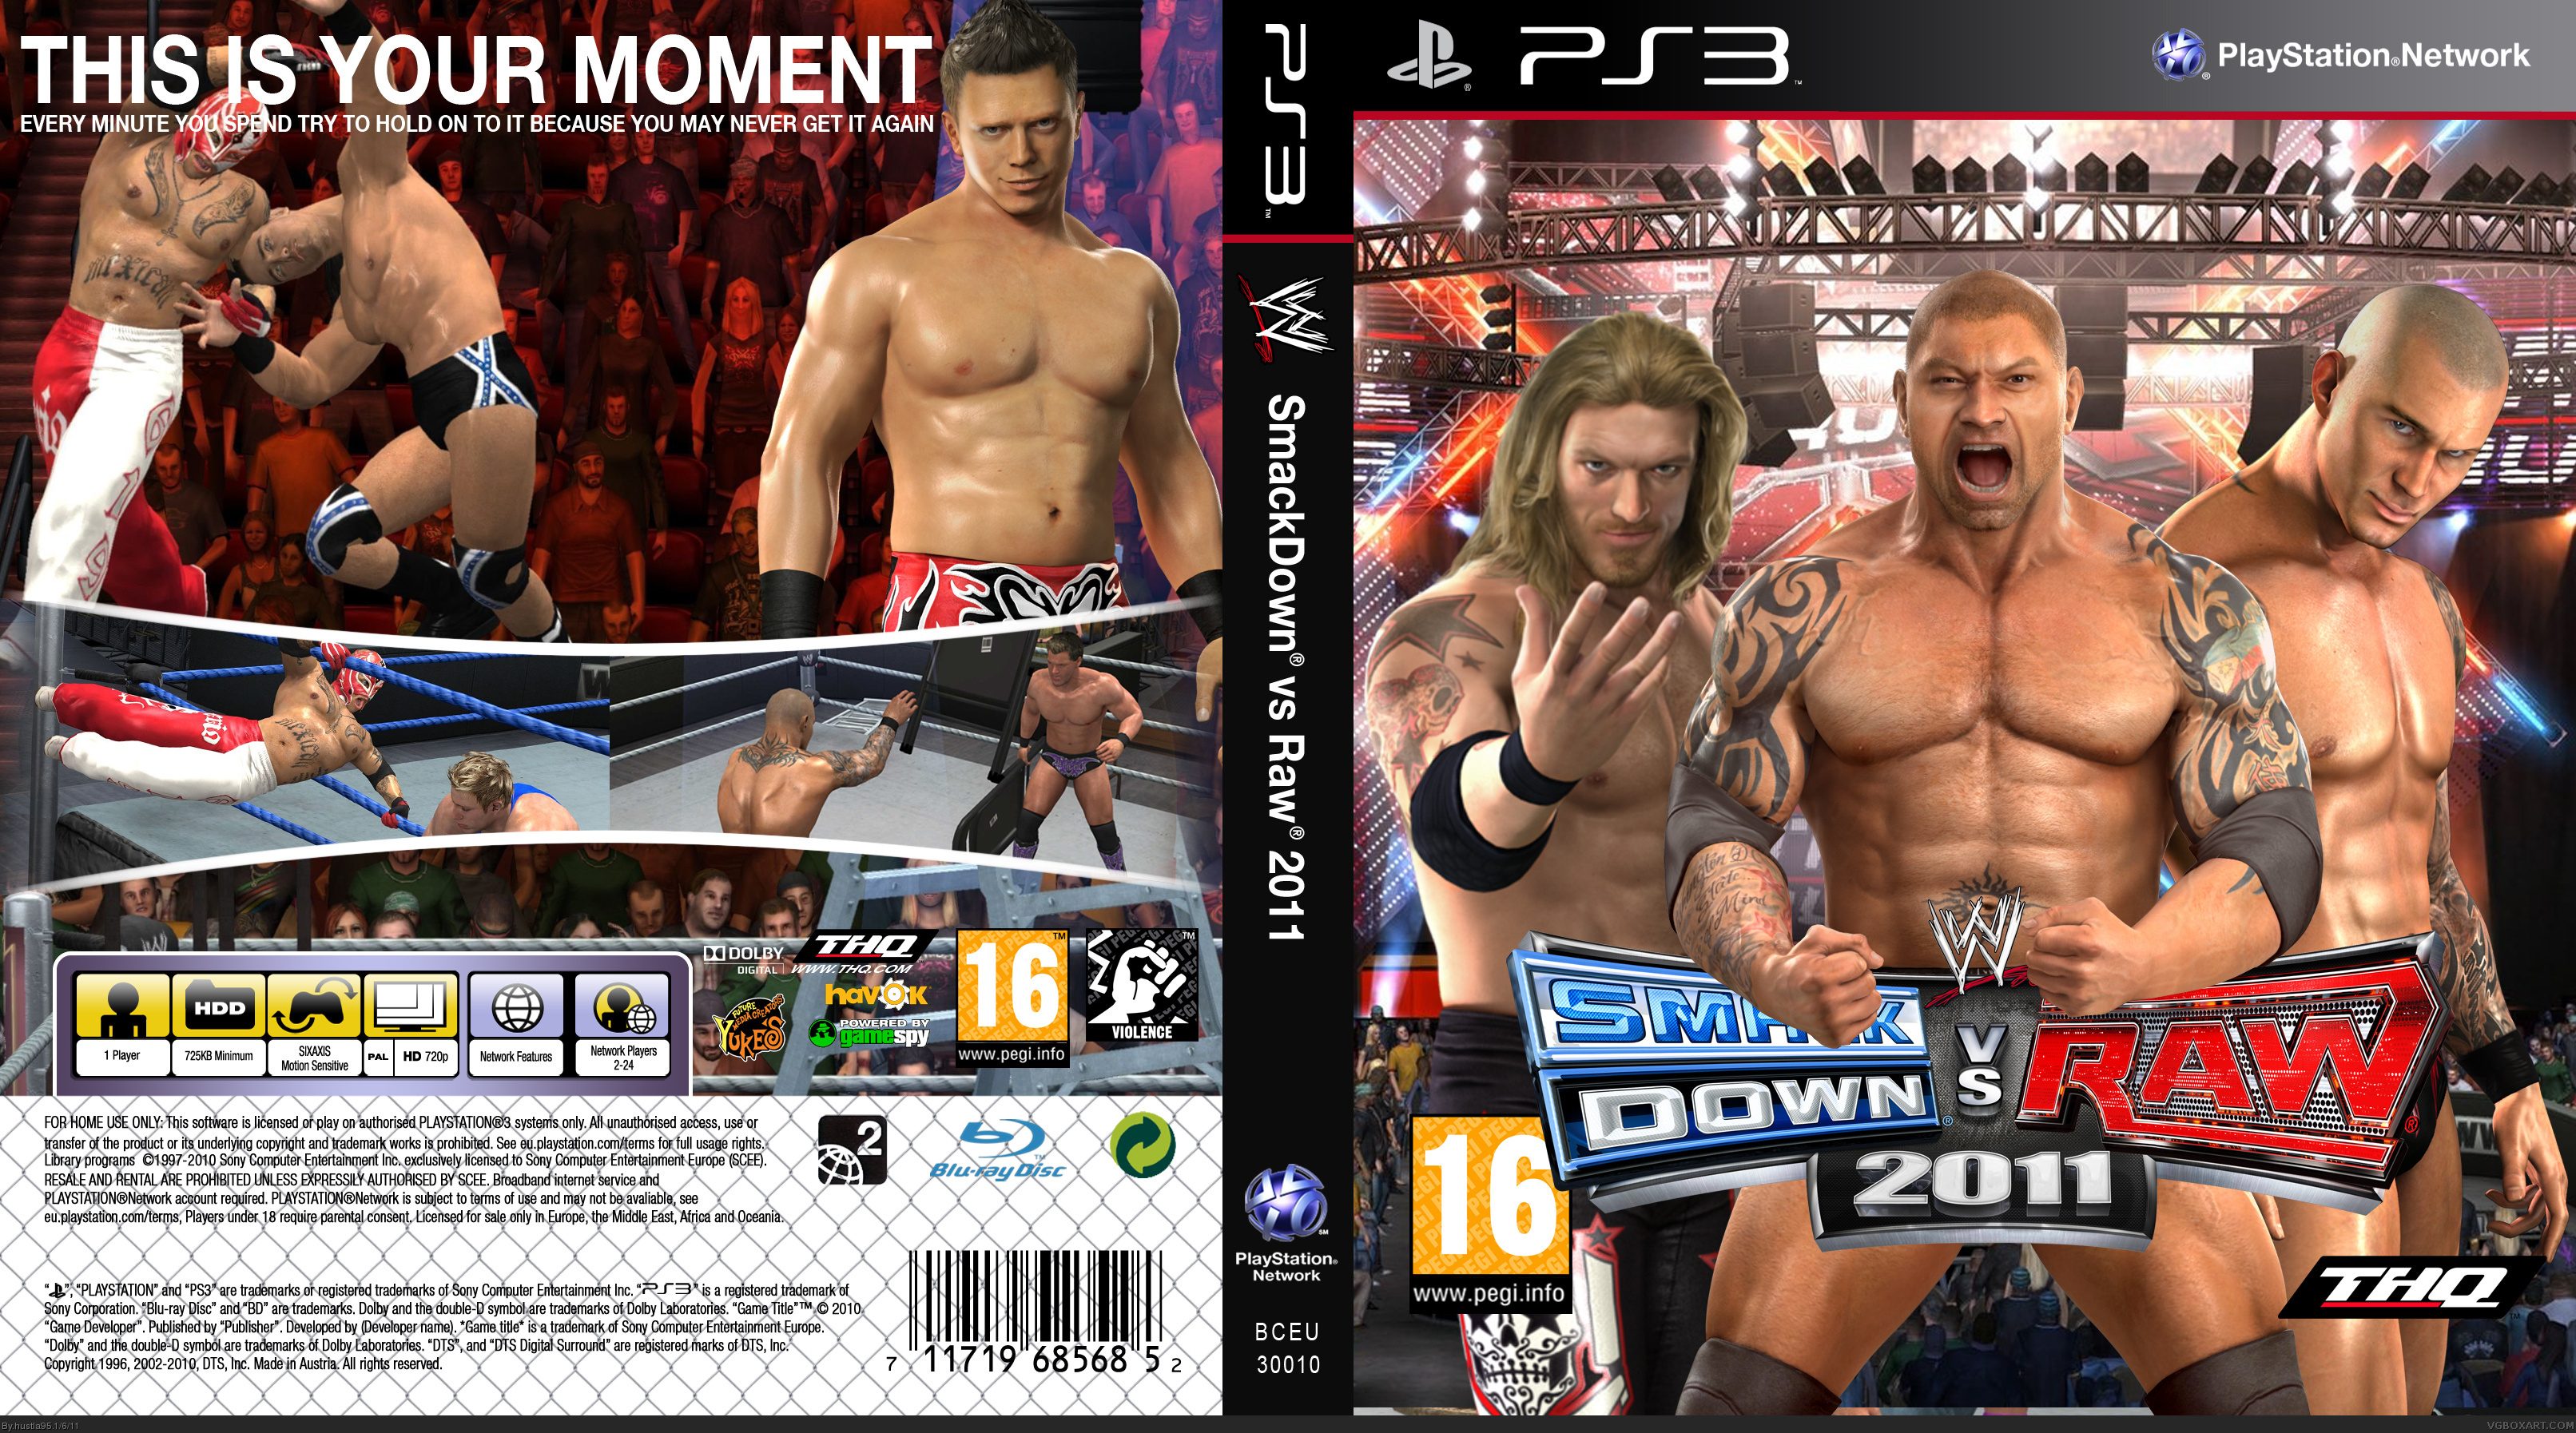 Smackdown vs Raw 2011 box cover